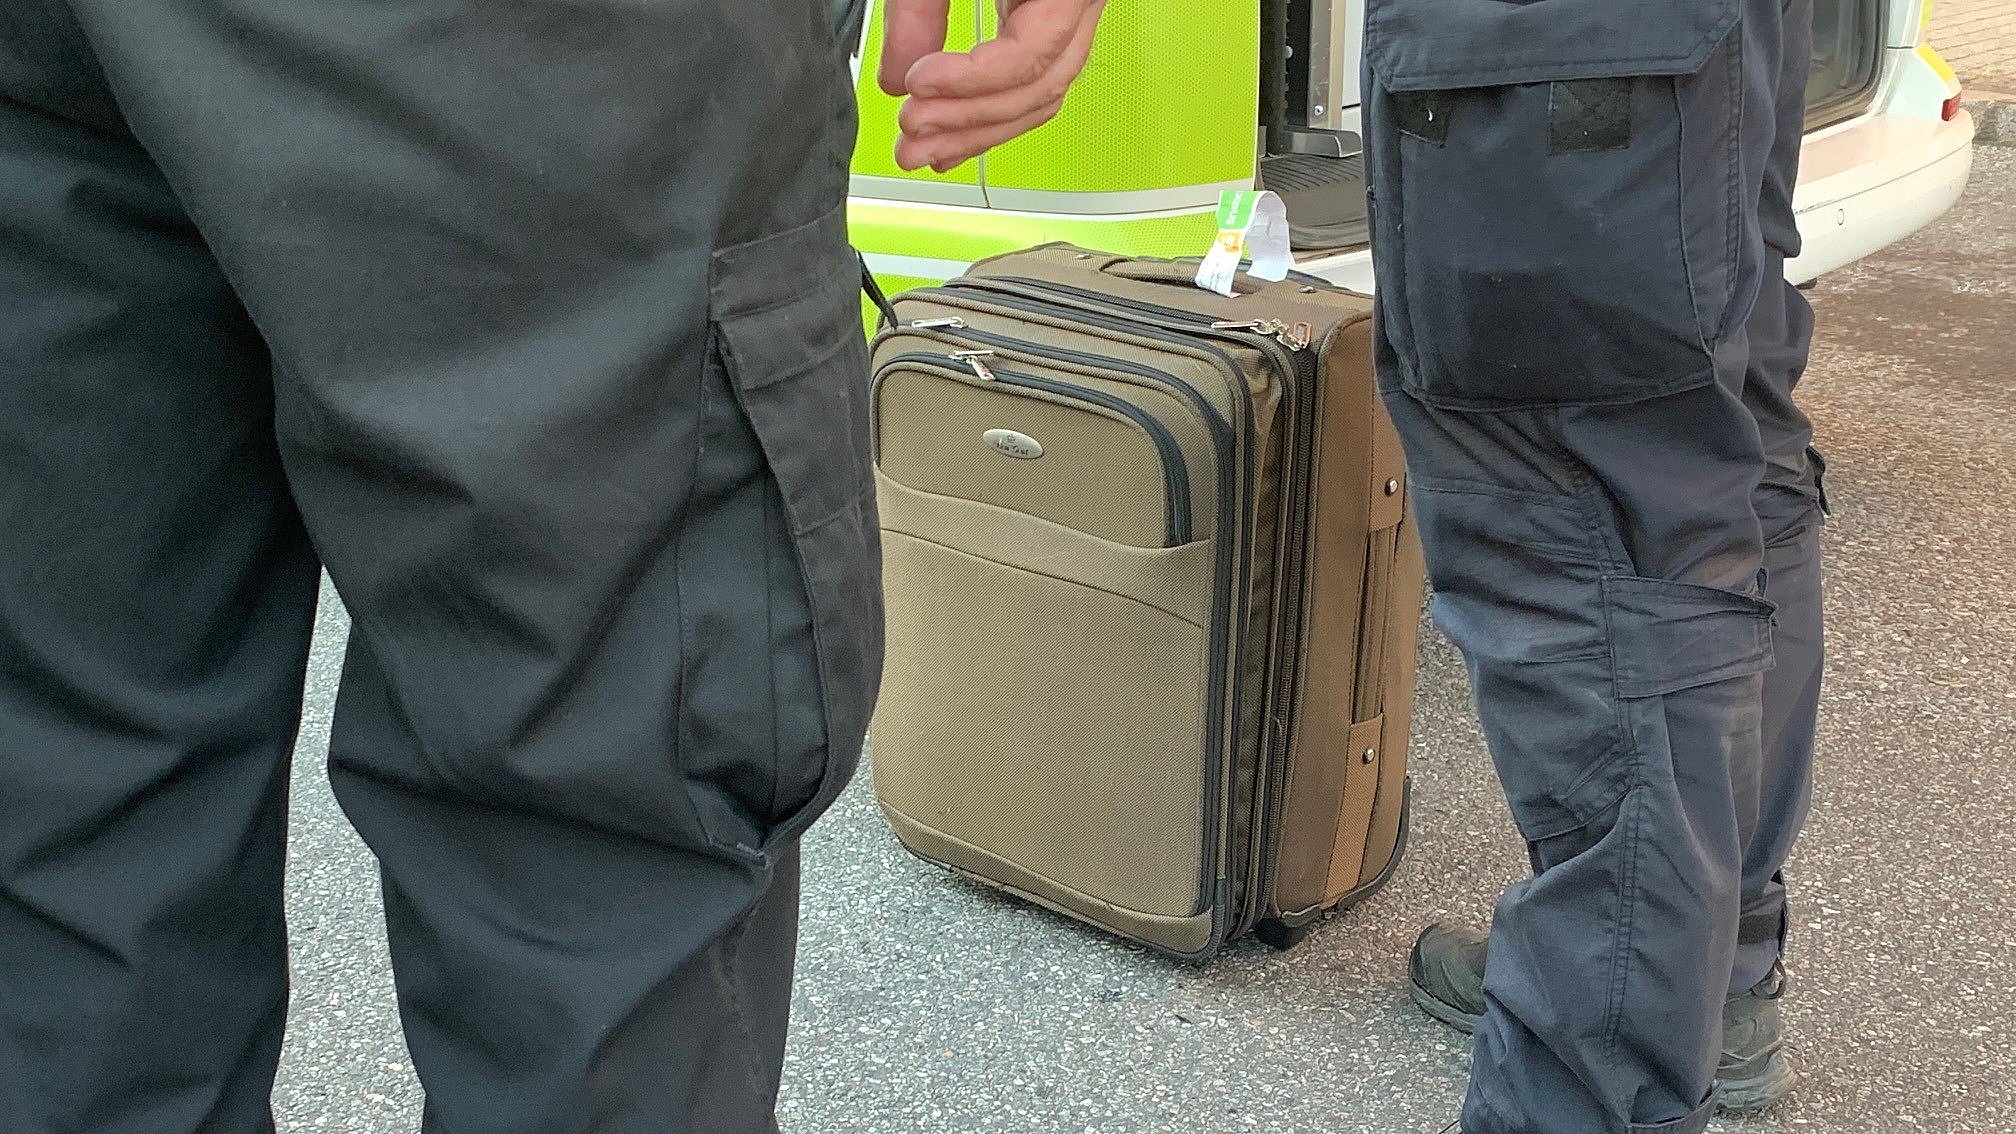 Mistænkelig kuffert undersøgt TV2 Nord